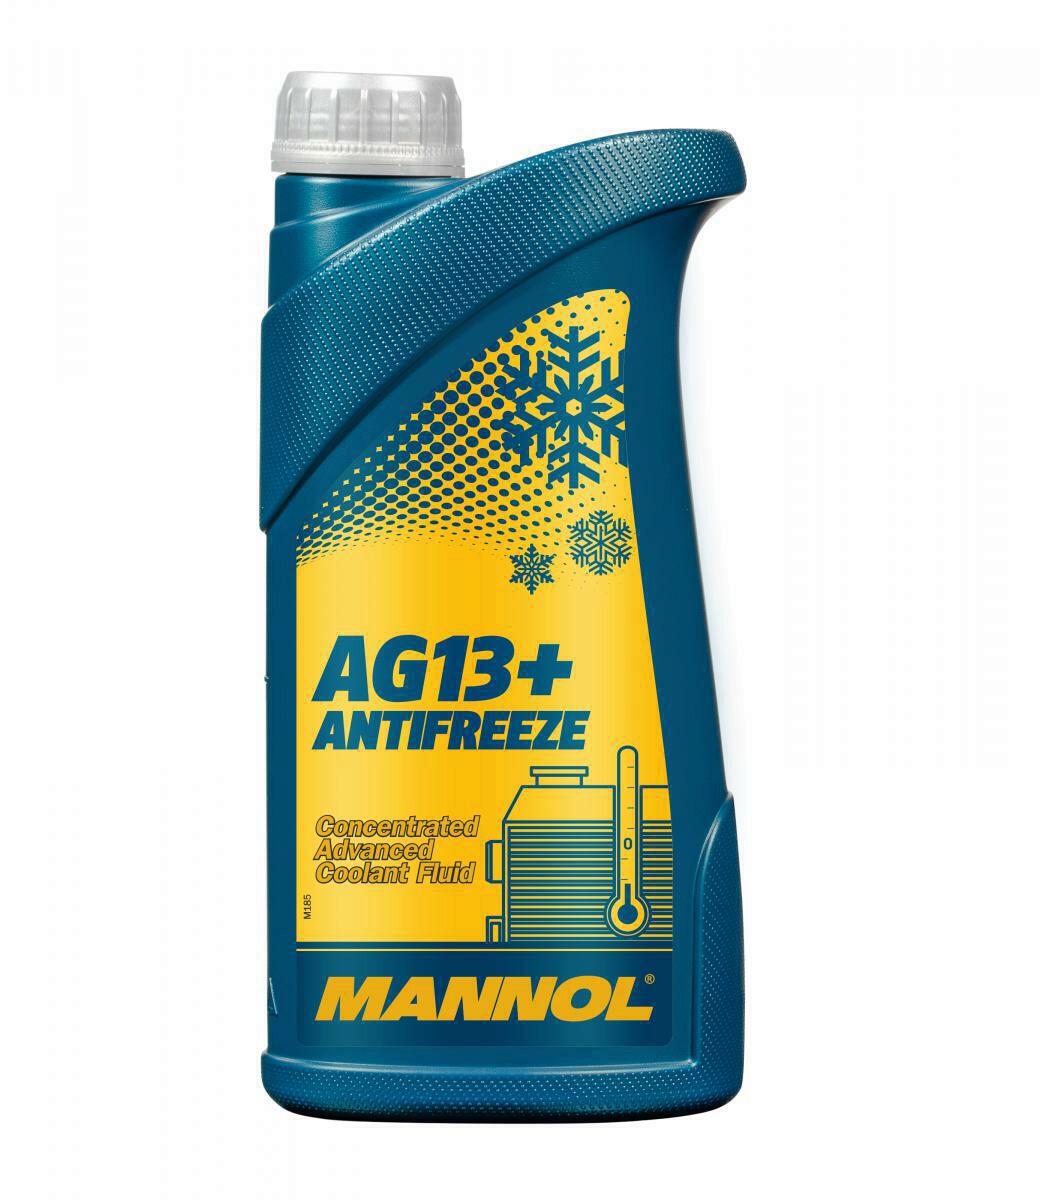 1L Mannol Antifreeze AG 13+ Advanced Frostschutz